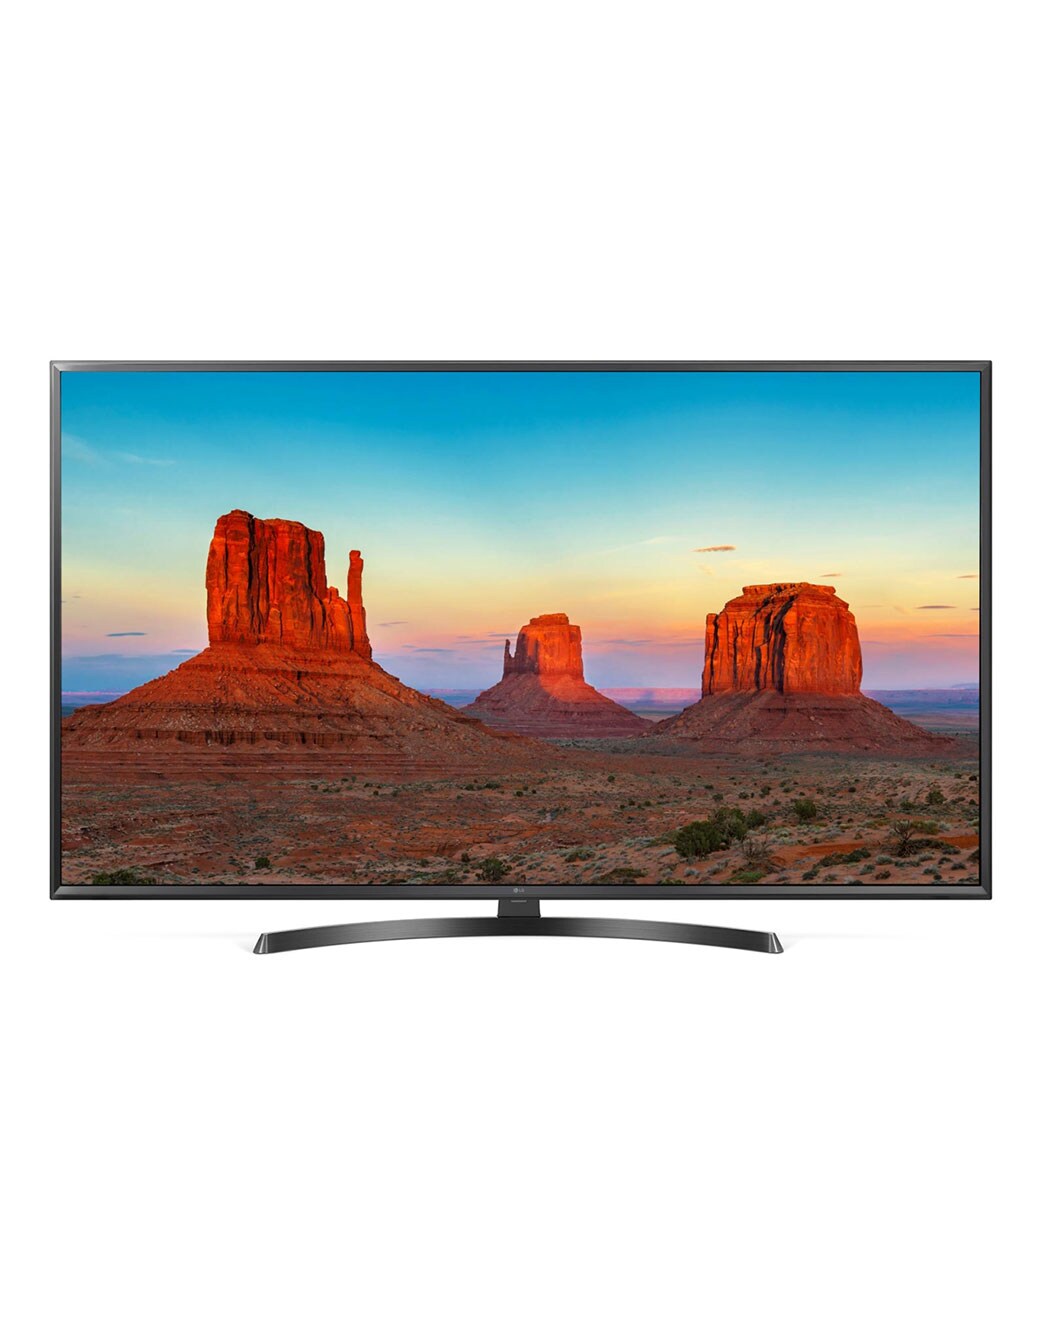 LG UHD TV 55 inch UK6400 Series IPS 4K Display 4K HDR Smart LED TV